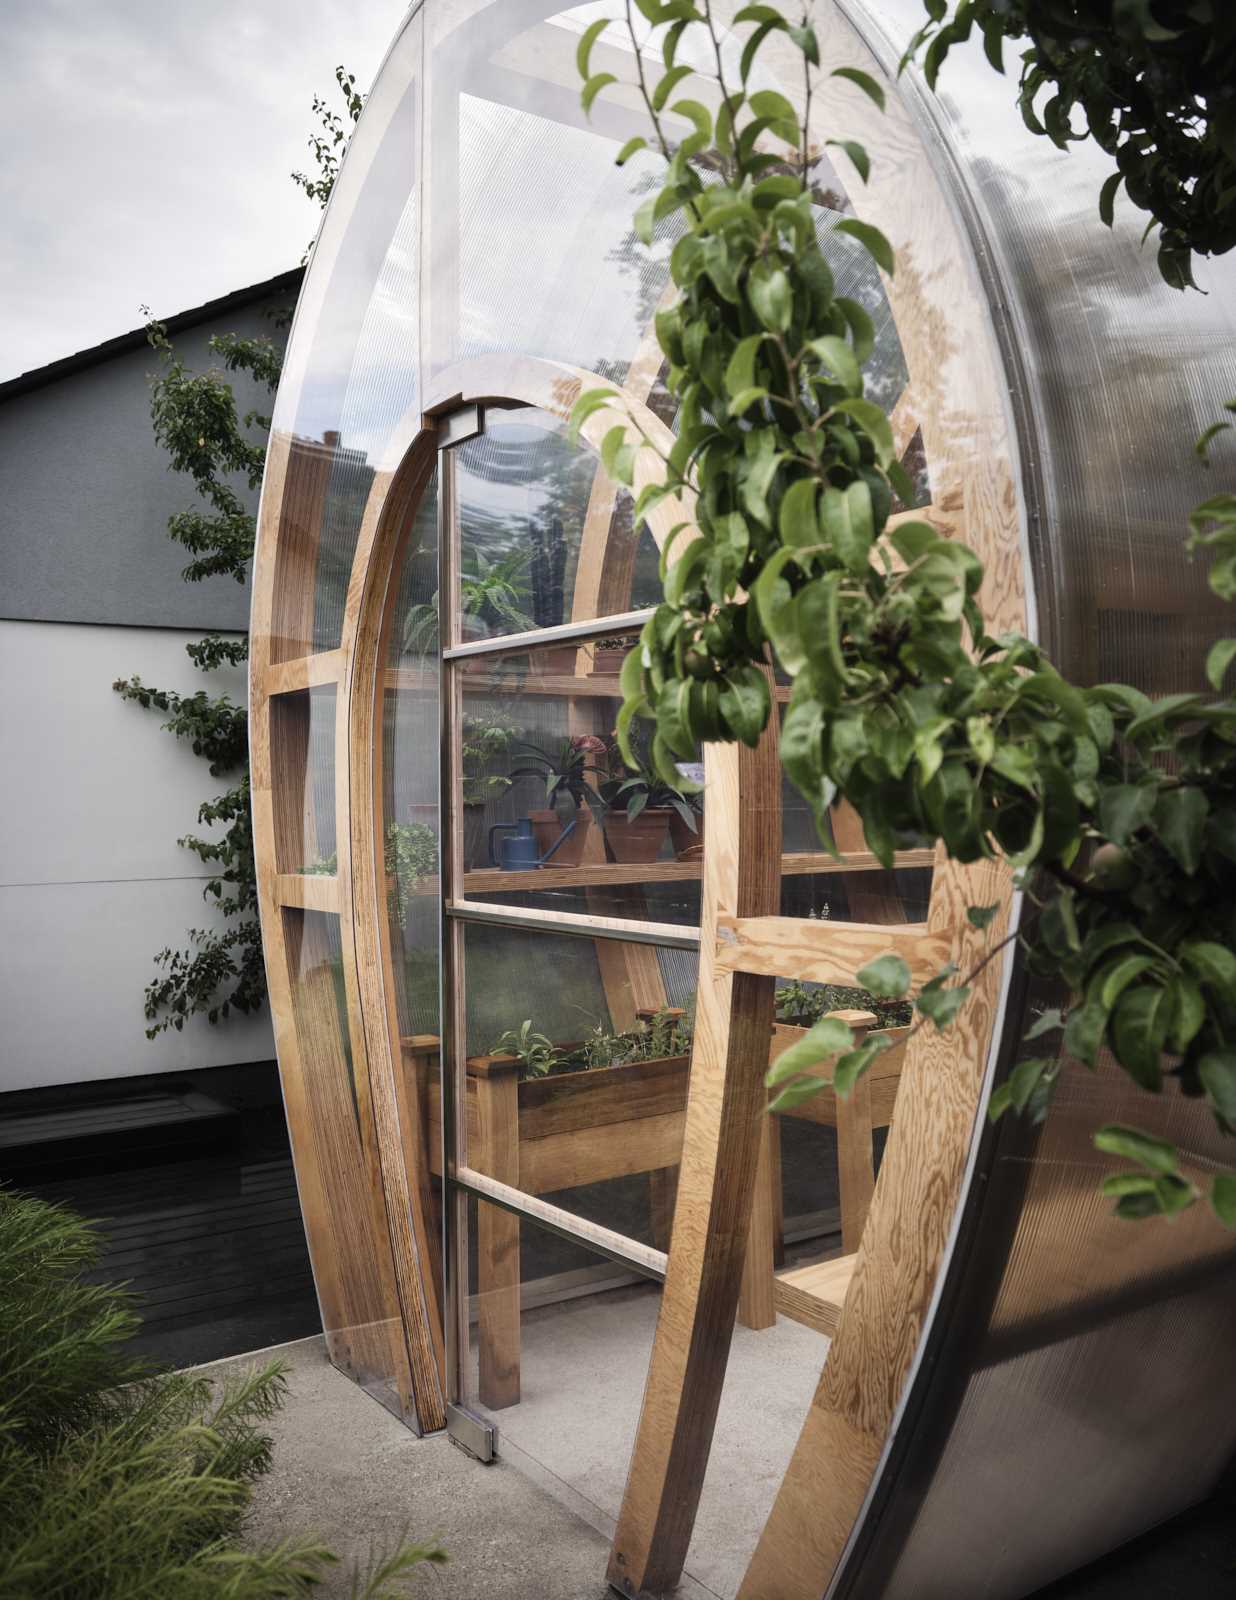 A modern and modular greenhouse design for a backyard.